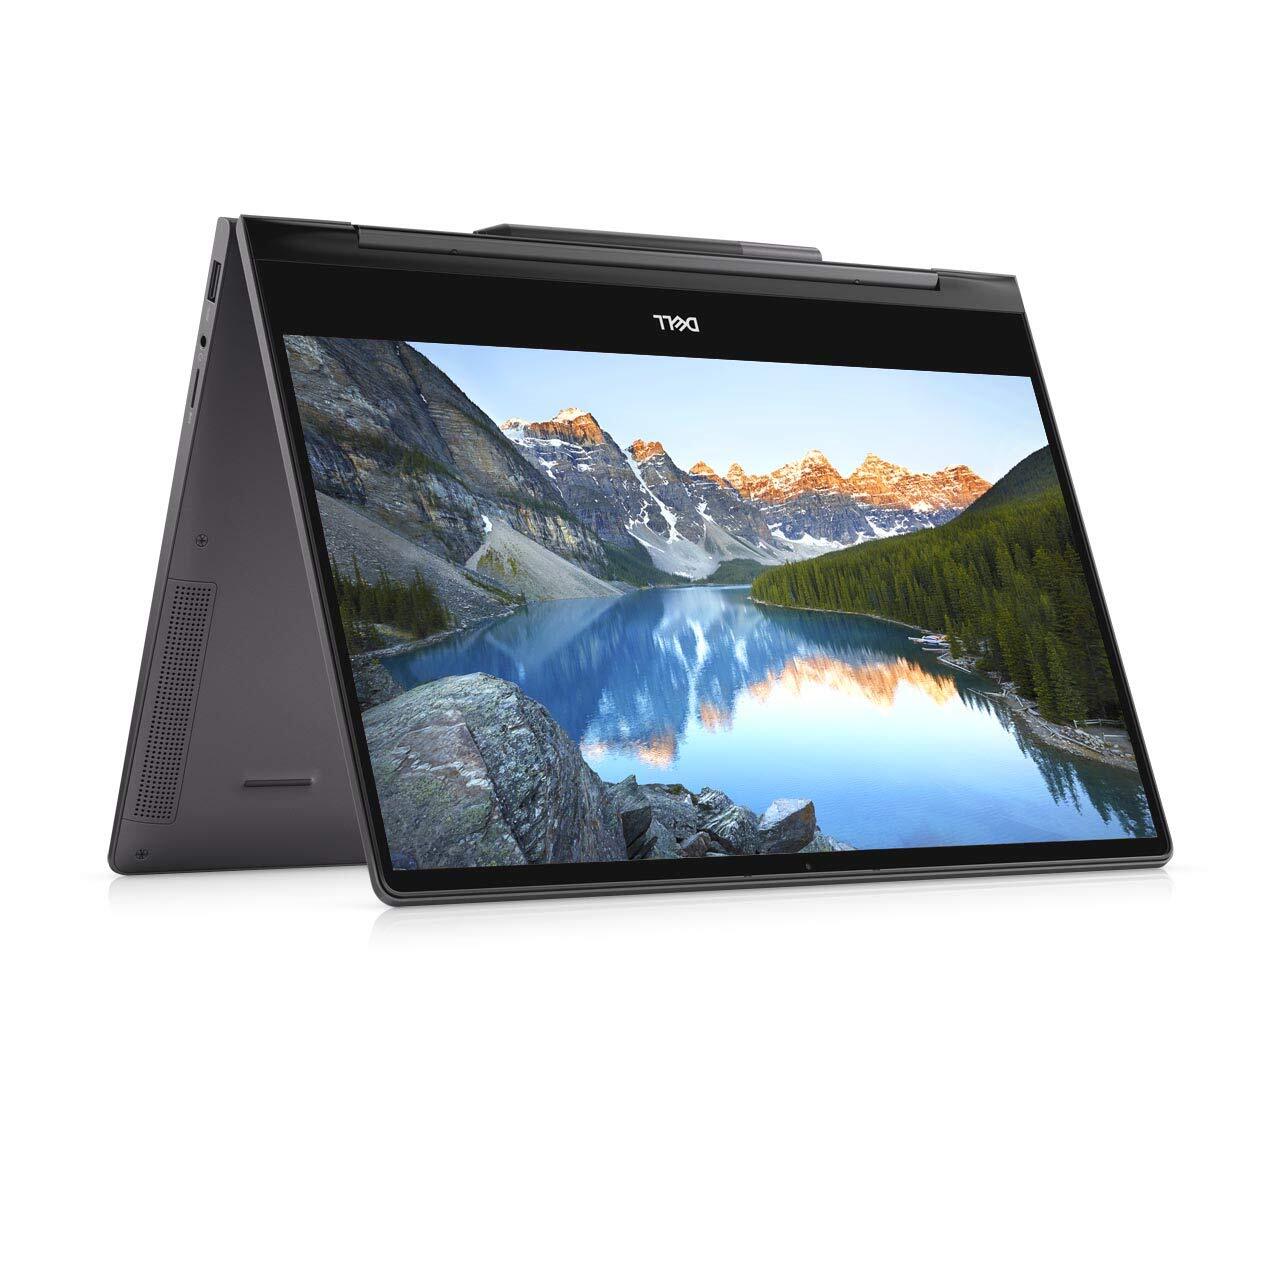 Dell Inspiron 7391 13.3-inch Laptop (10th Gen Core i7-10510U/16GB/512GB SSD/Windows 10+MS Office/Intel HD Graphics/Touchscreen), Black-M000000000300 www.mysocially.com